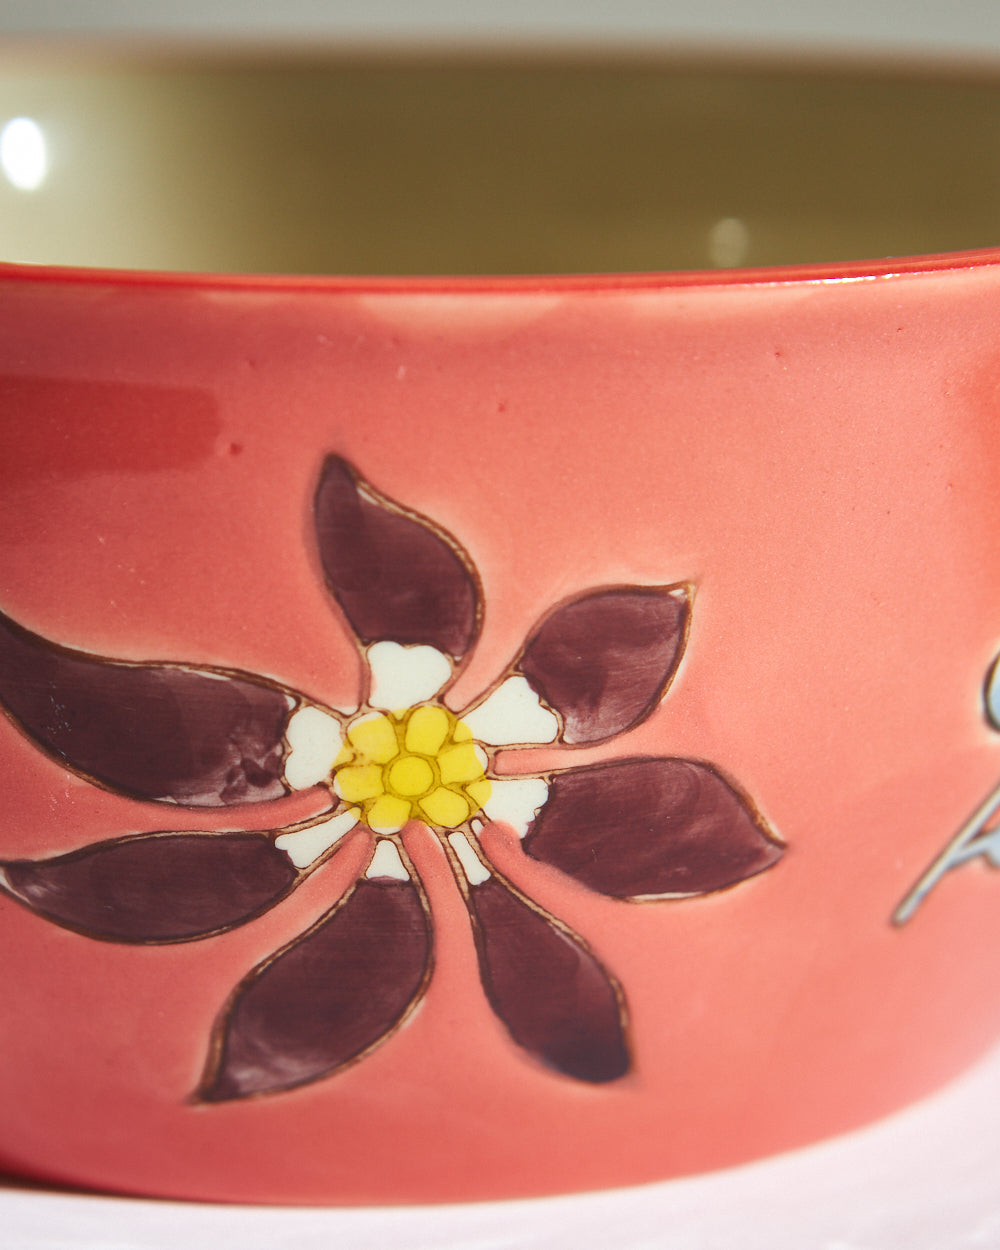 Hibiscus Bloom Snack Bowl